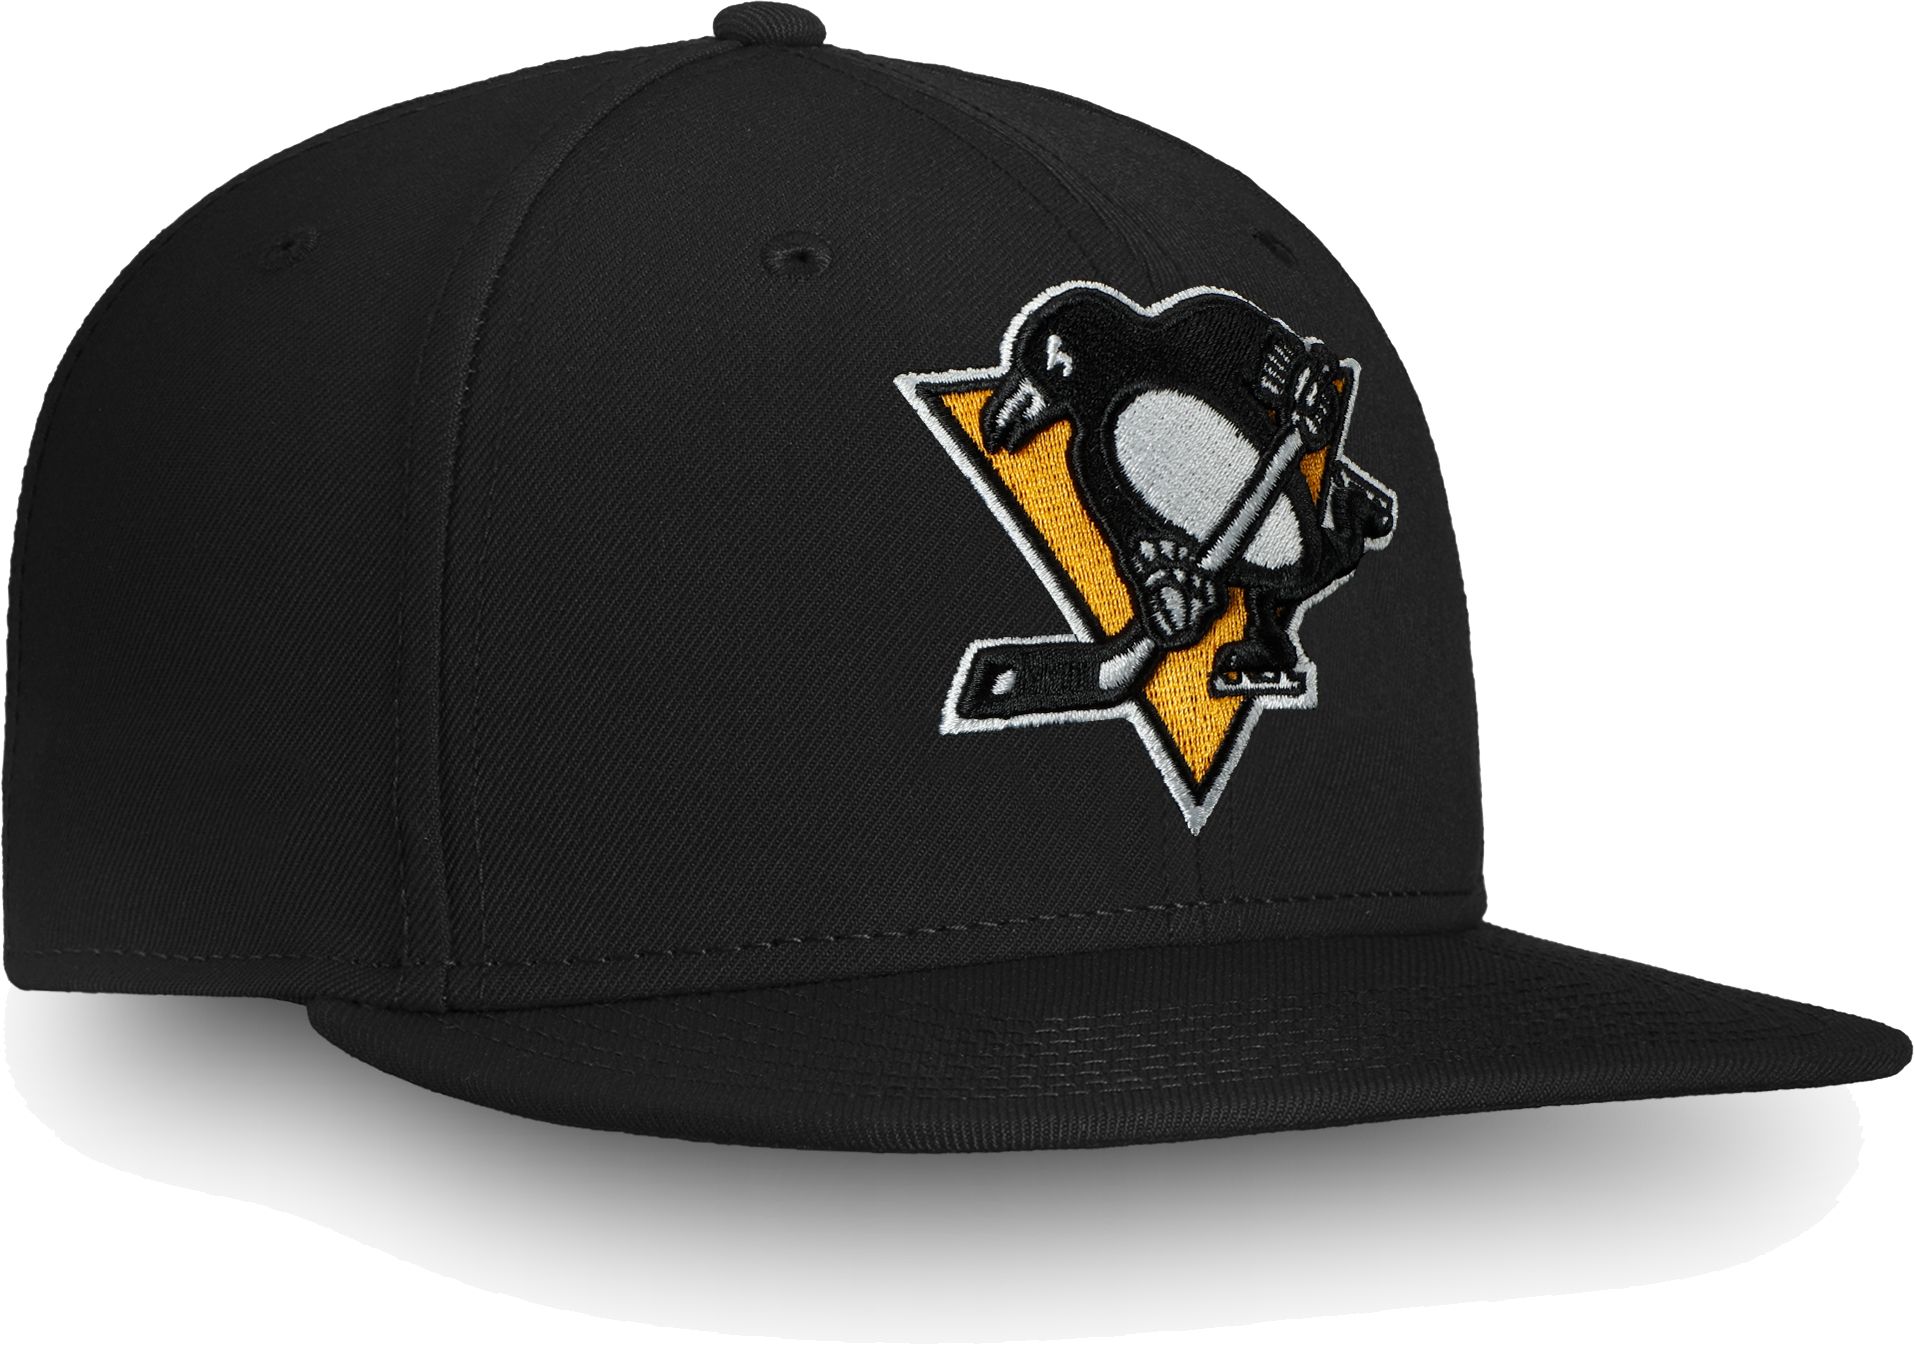 Pittsburgh Penguins Hats, Penguins Hat, Pittsburgh Penguins Knit Hats,  Snapbacks, Penguins Caps